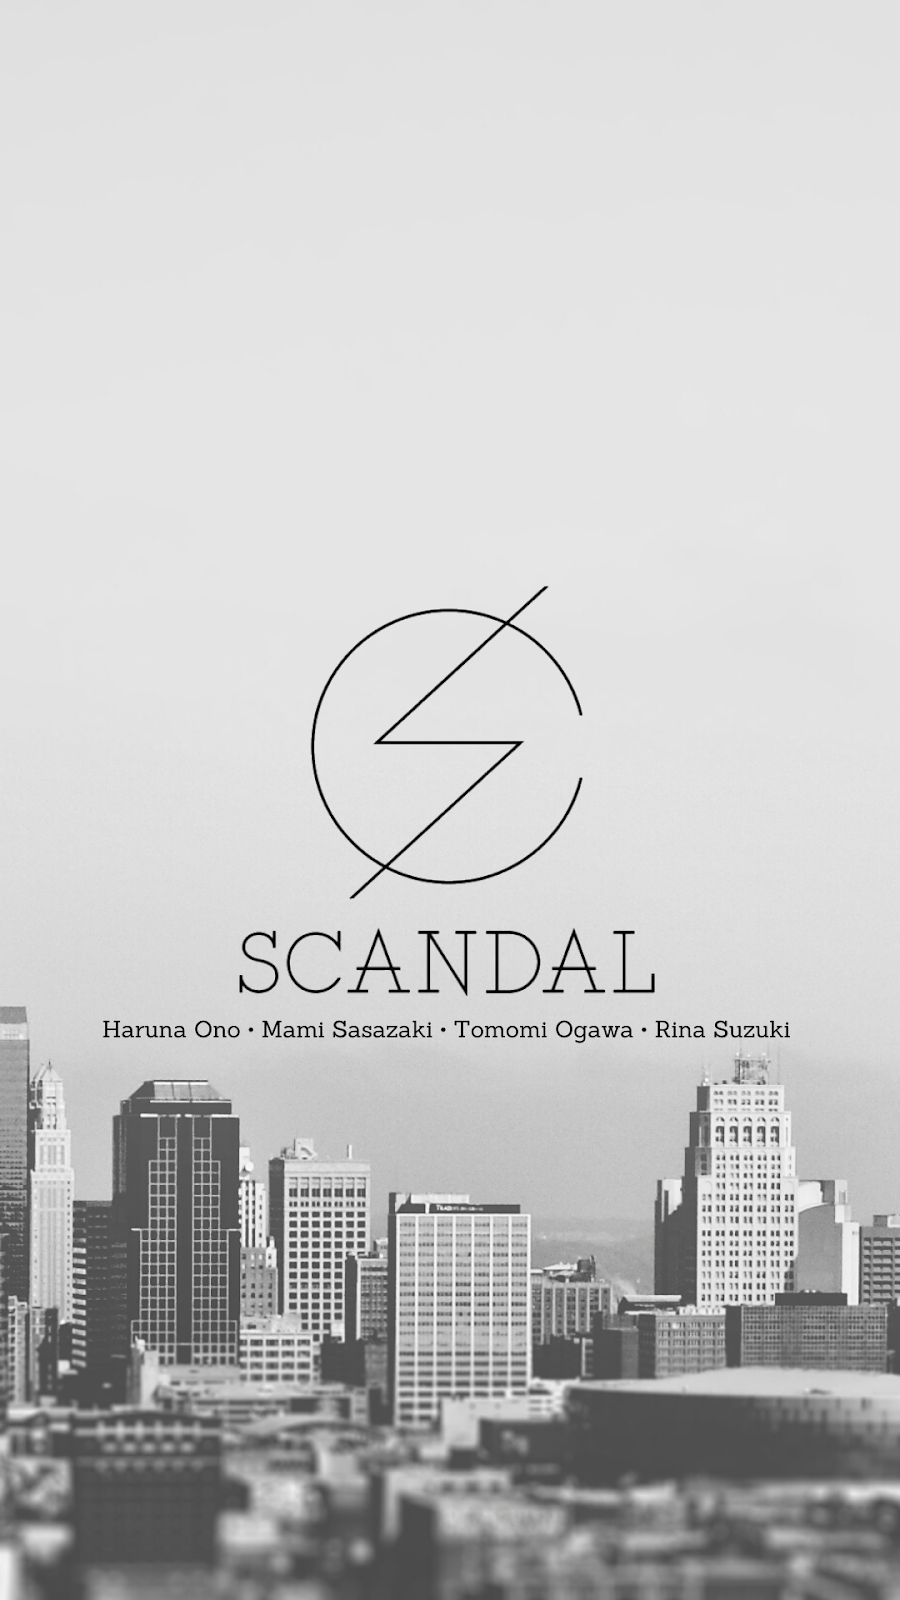 Scandal Japan Band Wallpaper Collection Wallpaper Scandal Band From Japan